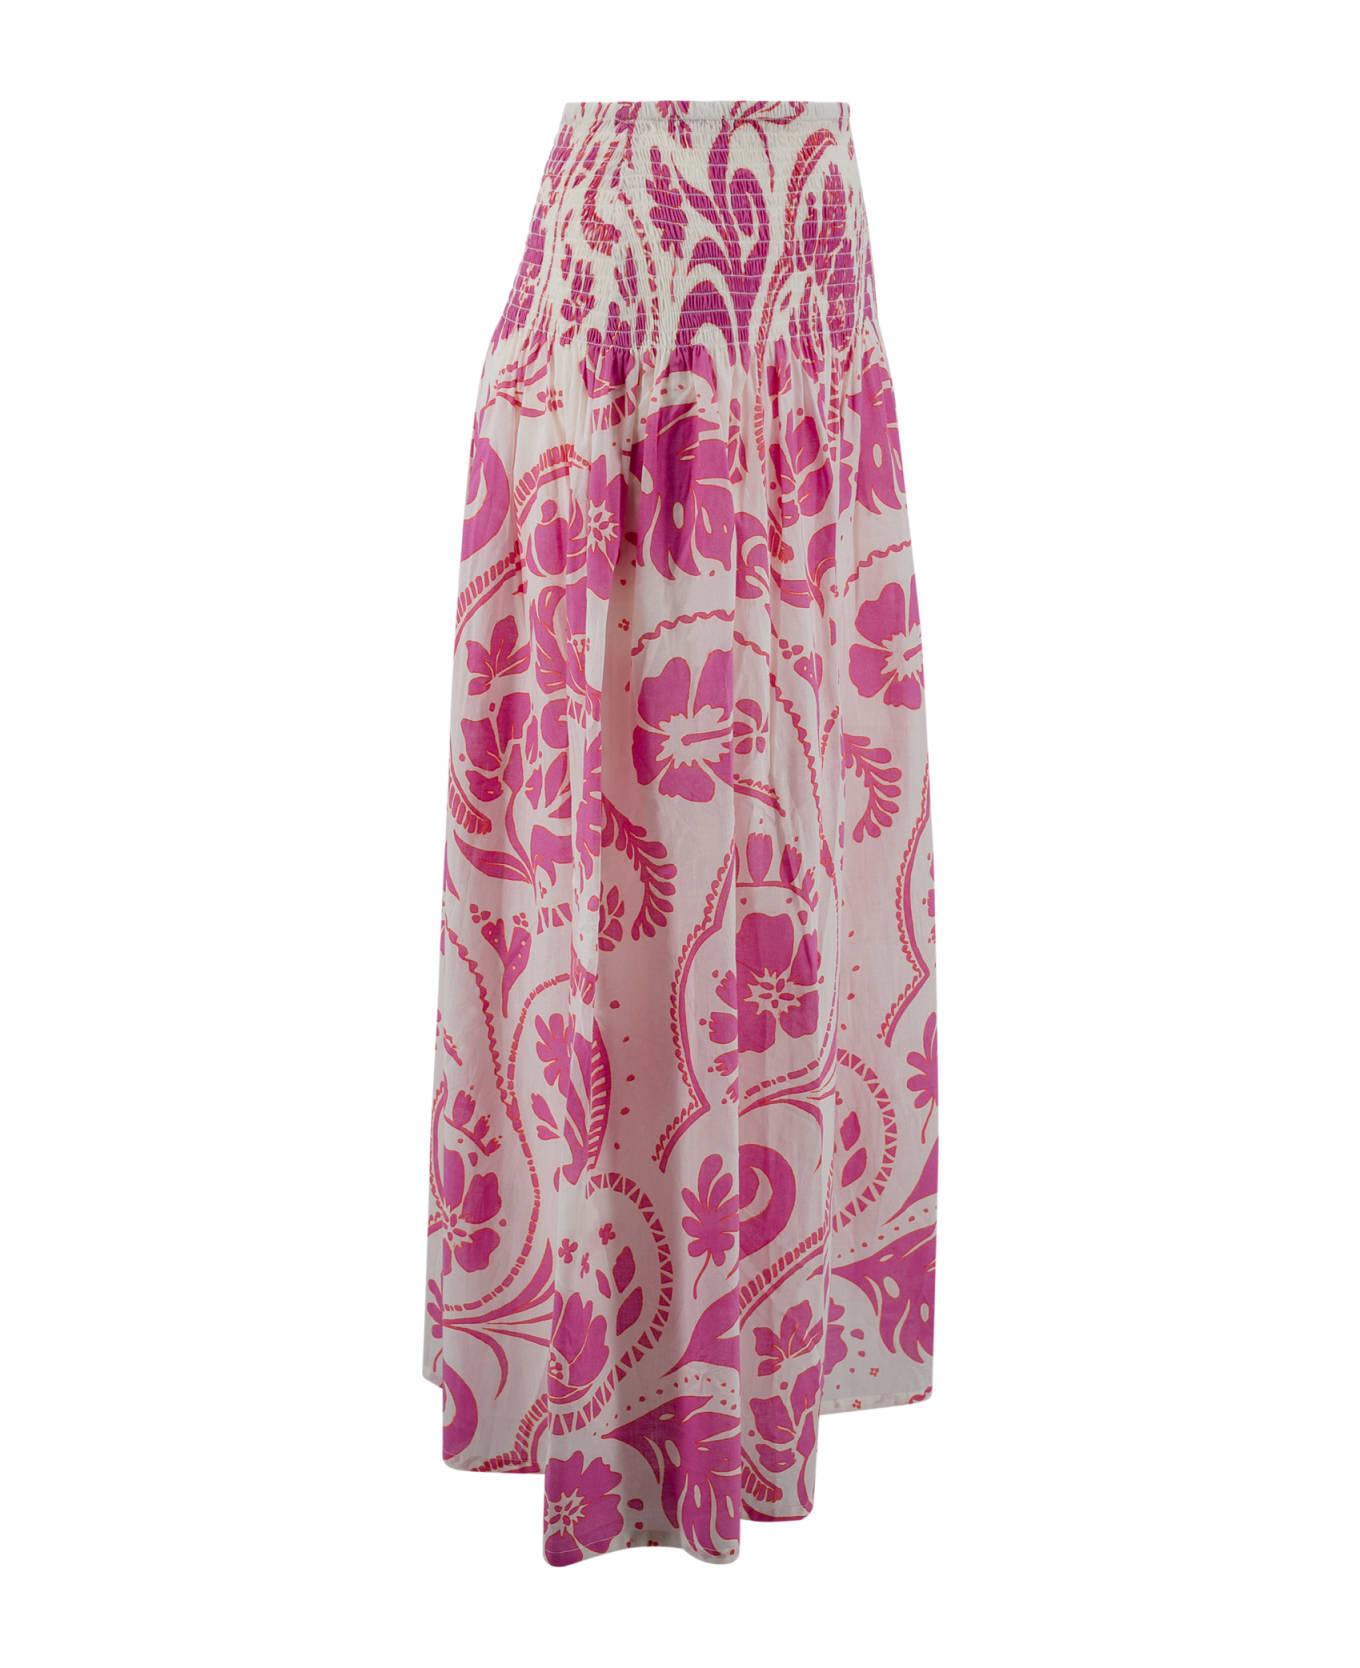 Surkana Long Skirt With Elastic Gathers At The Waist - Fuchsia